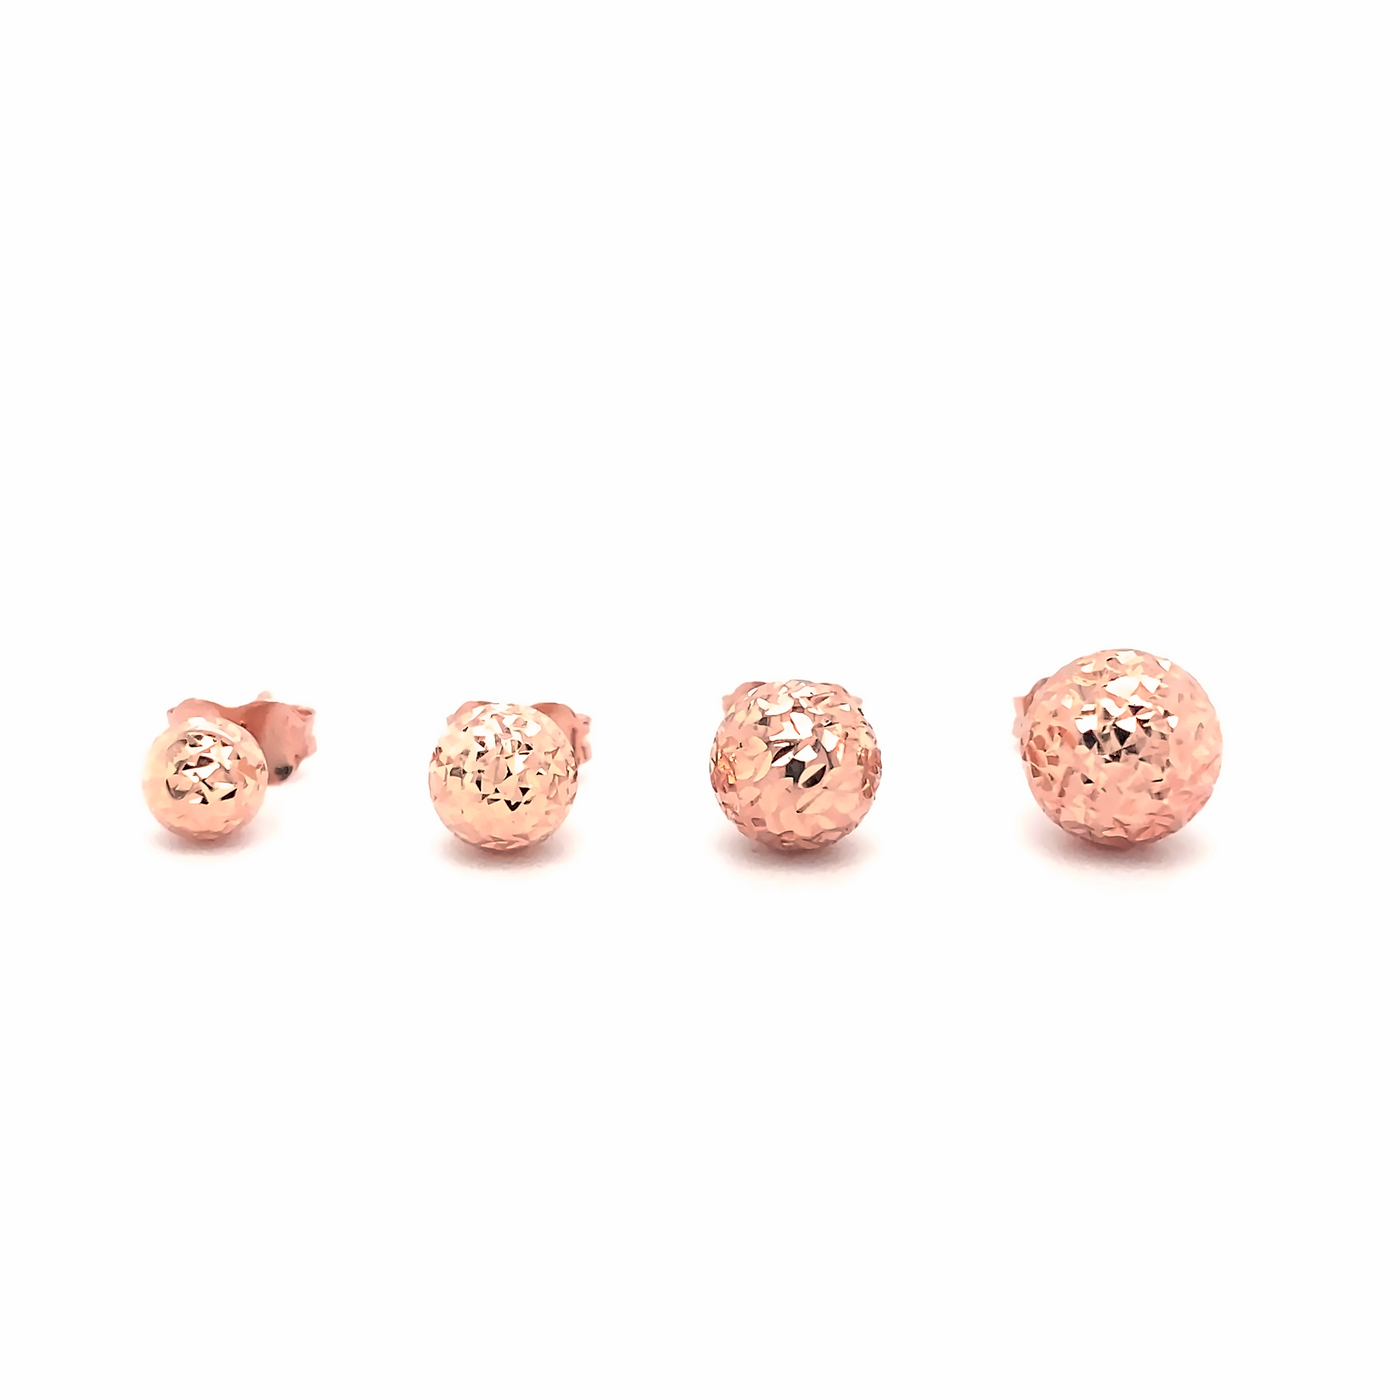 10 Karat Rose Gold Sparkle Cut Stud Earrings